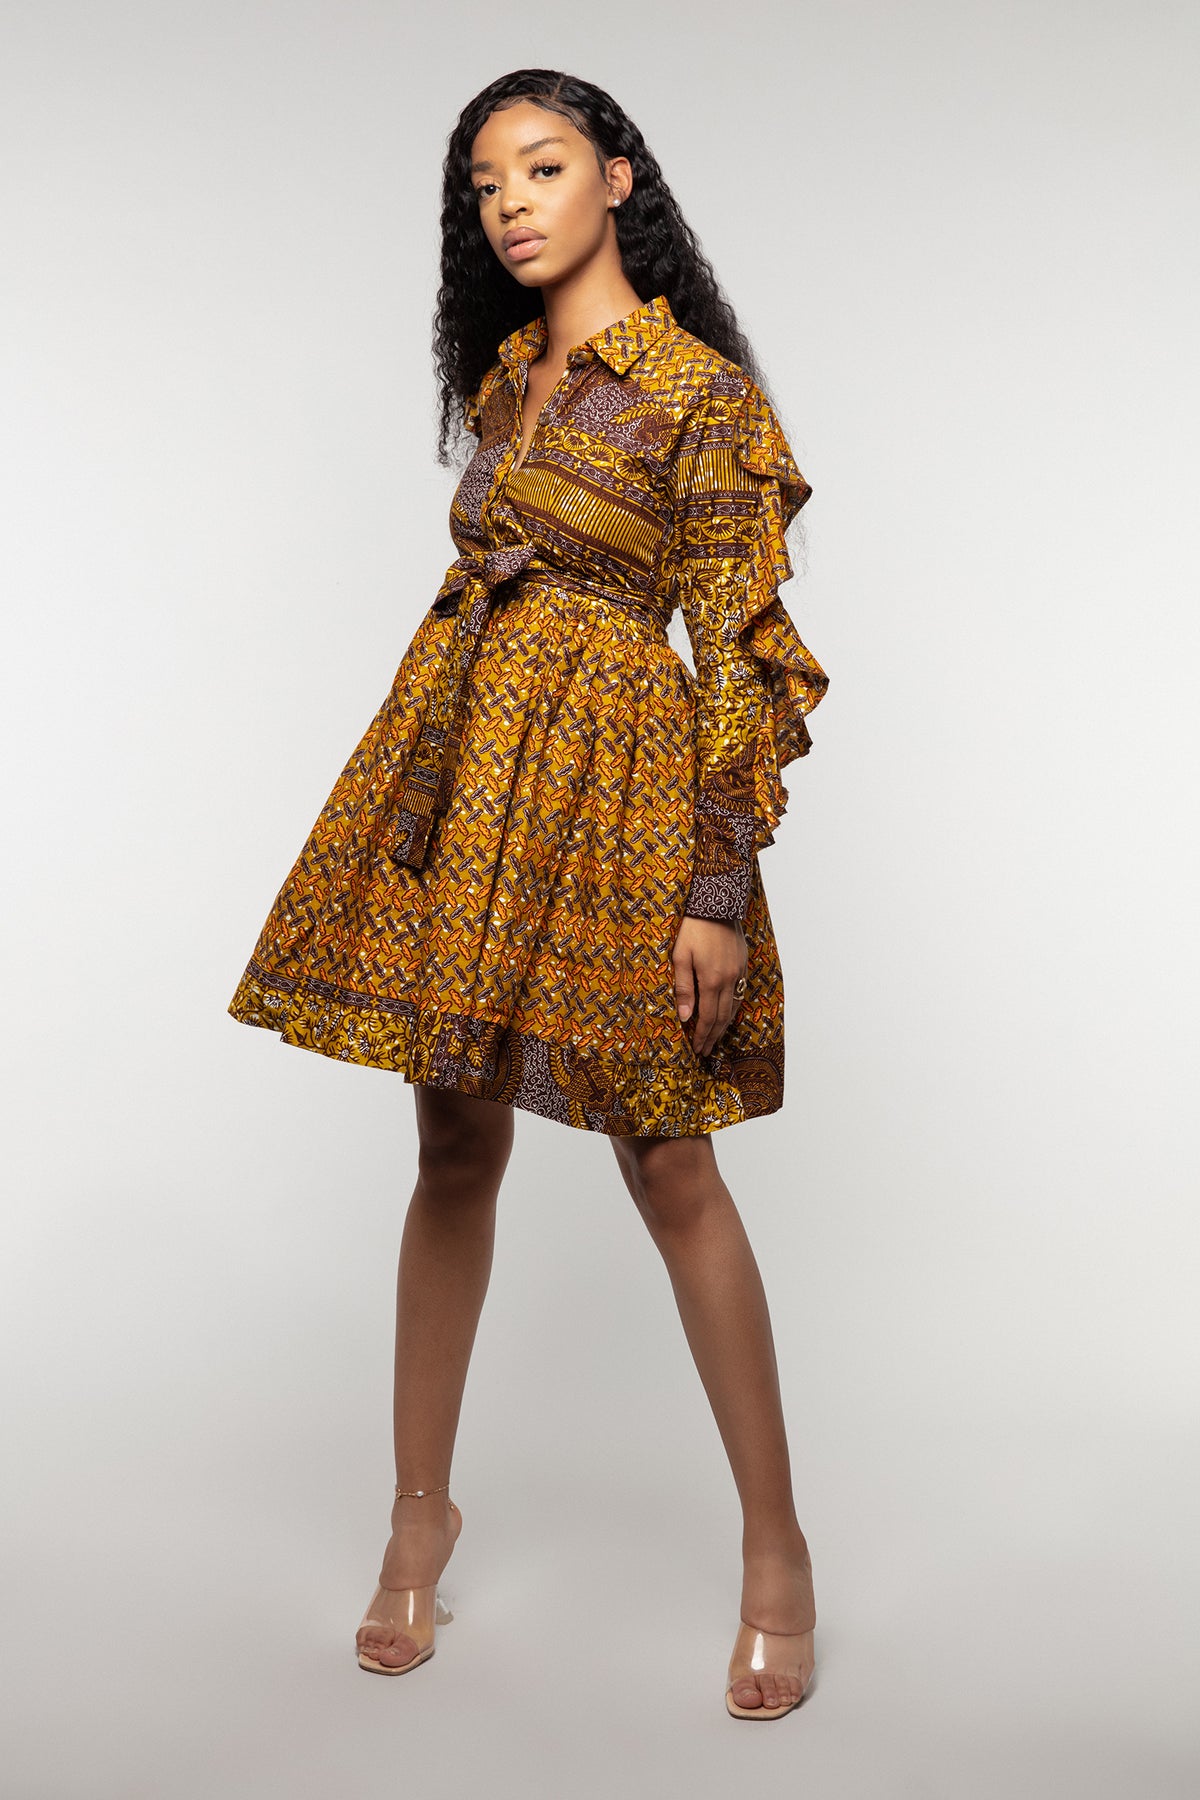 African print dress ohema ohene